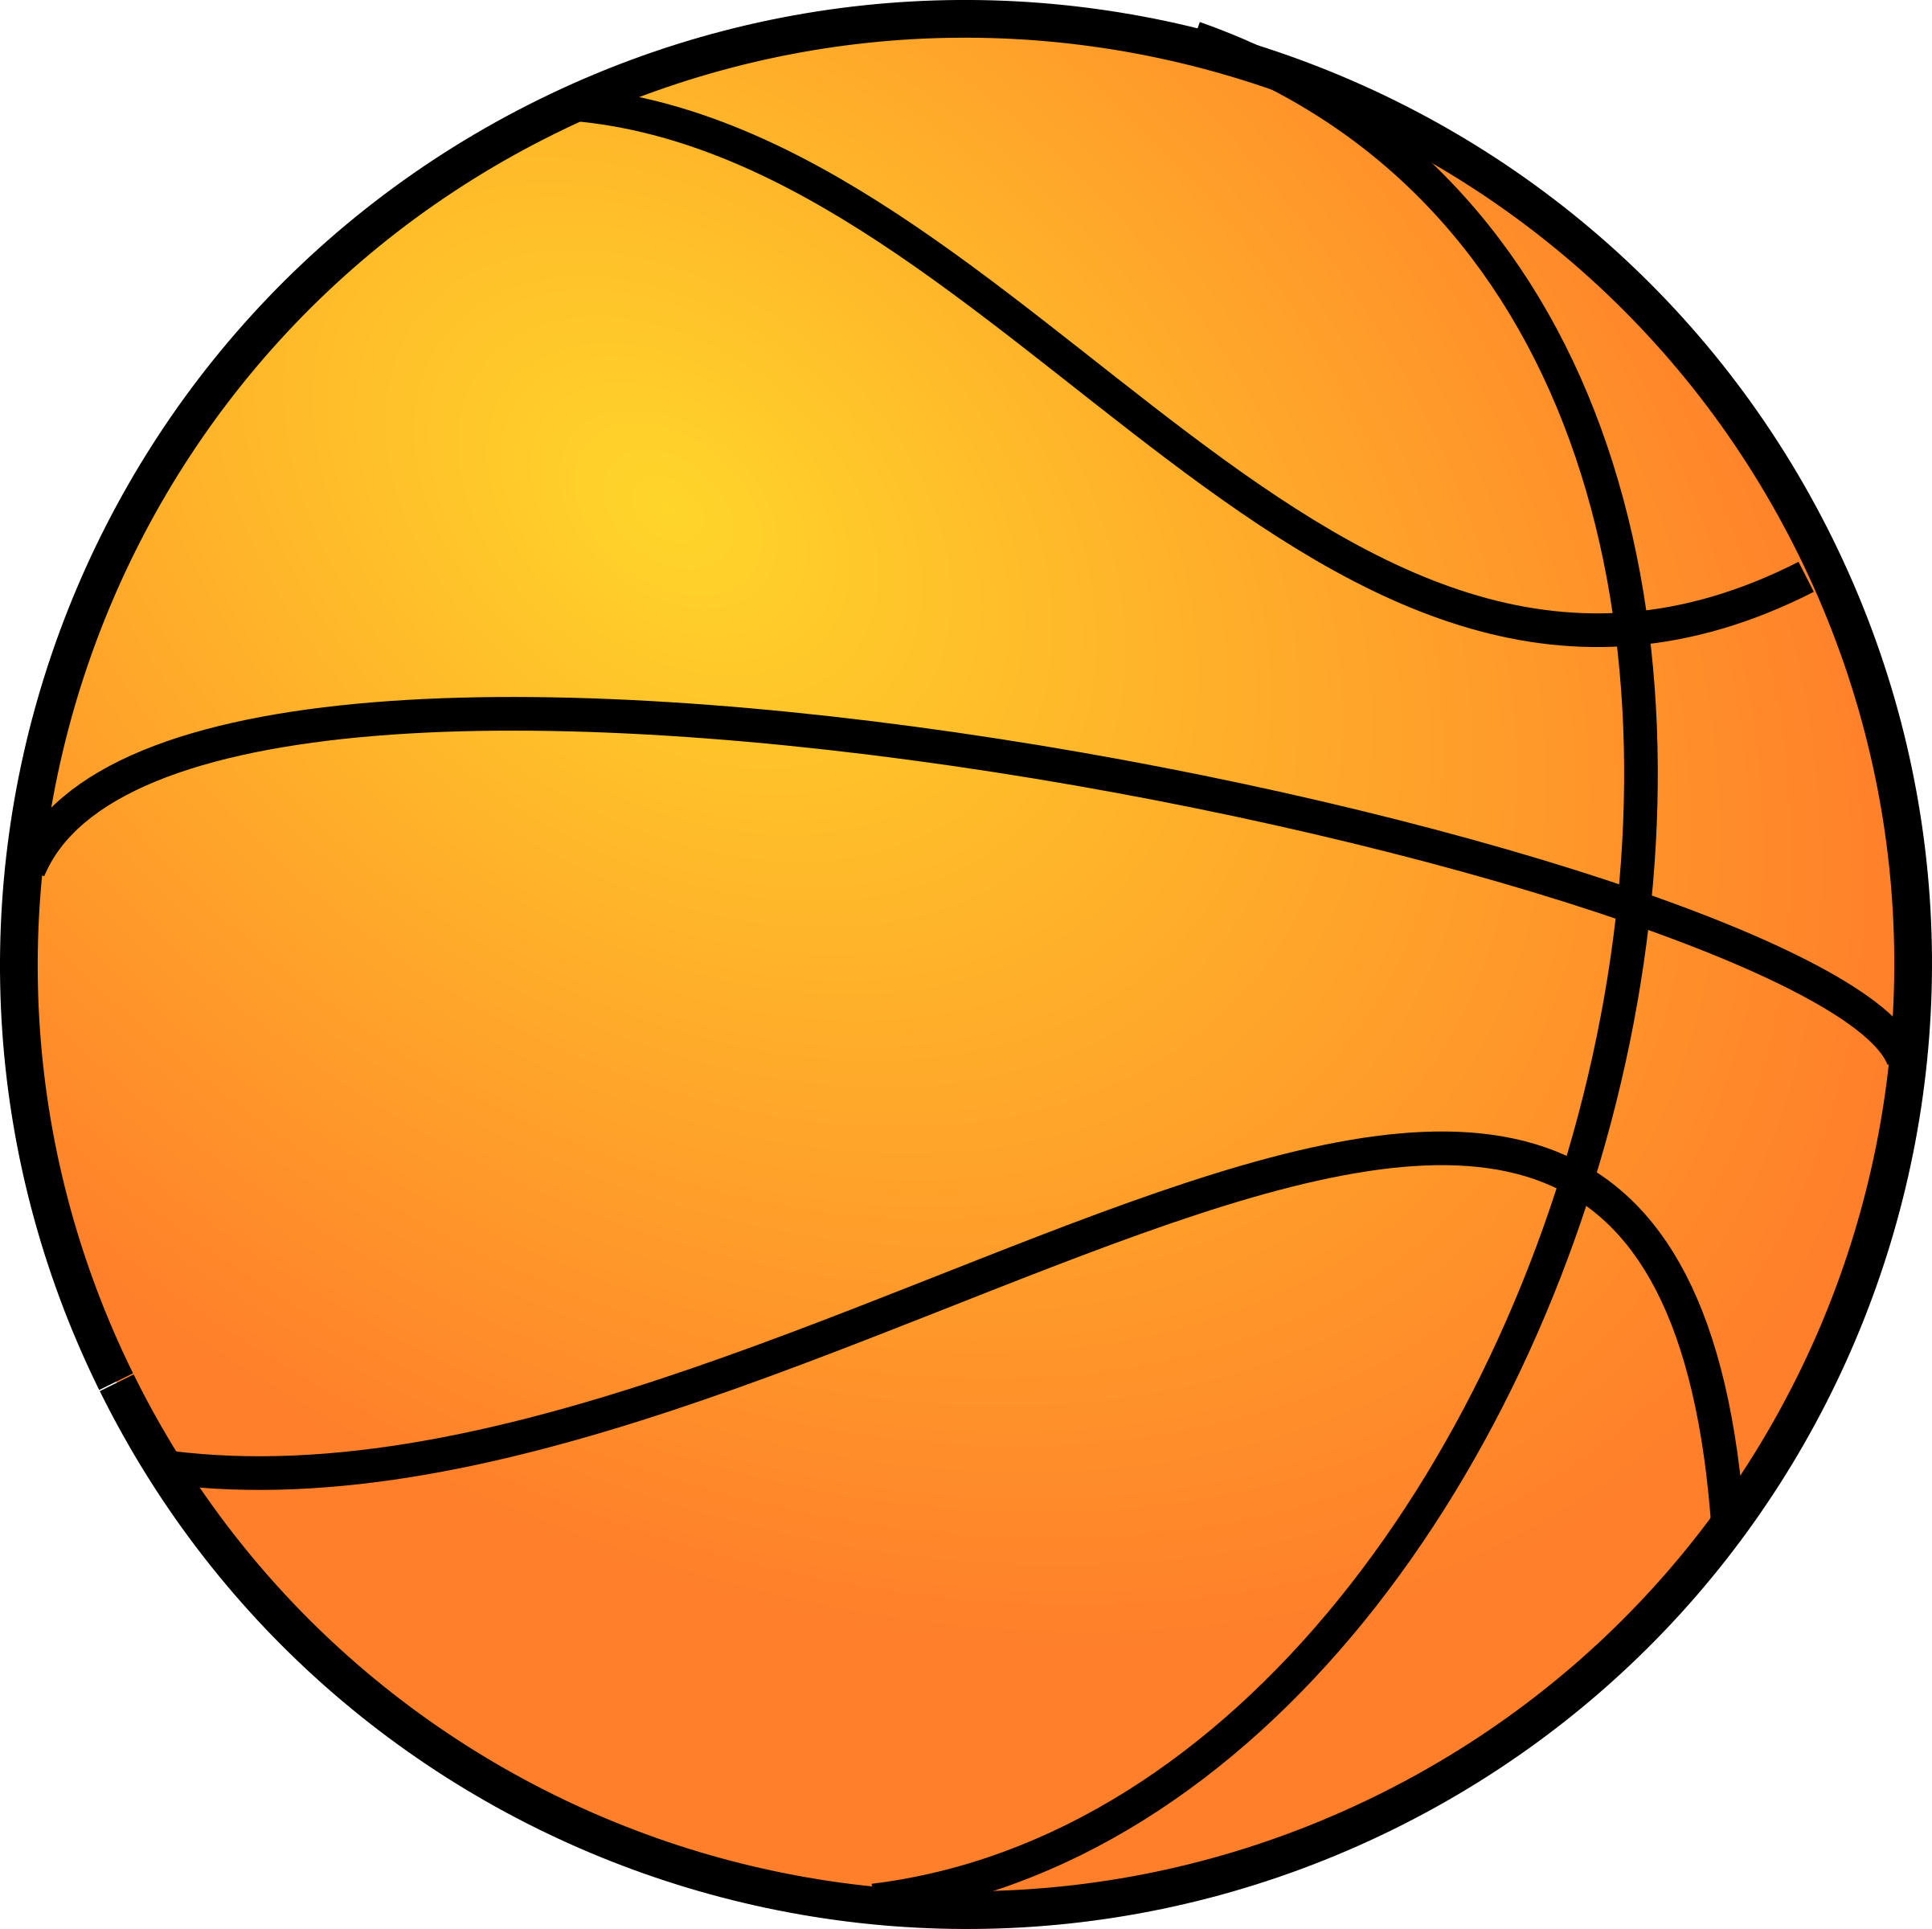 Clipart Basketball